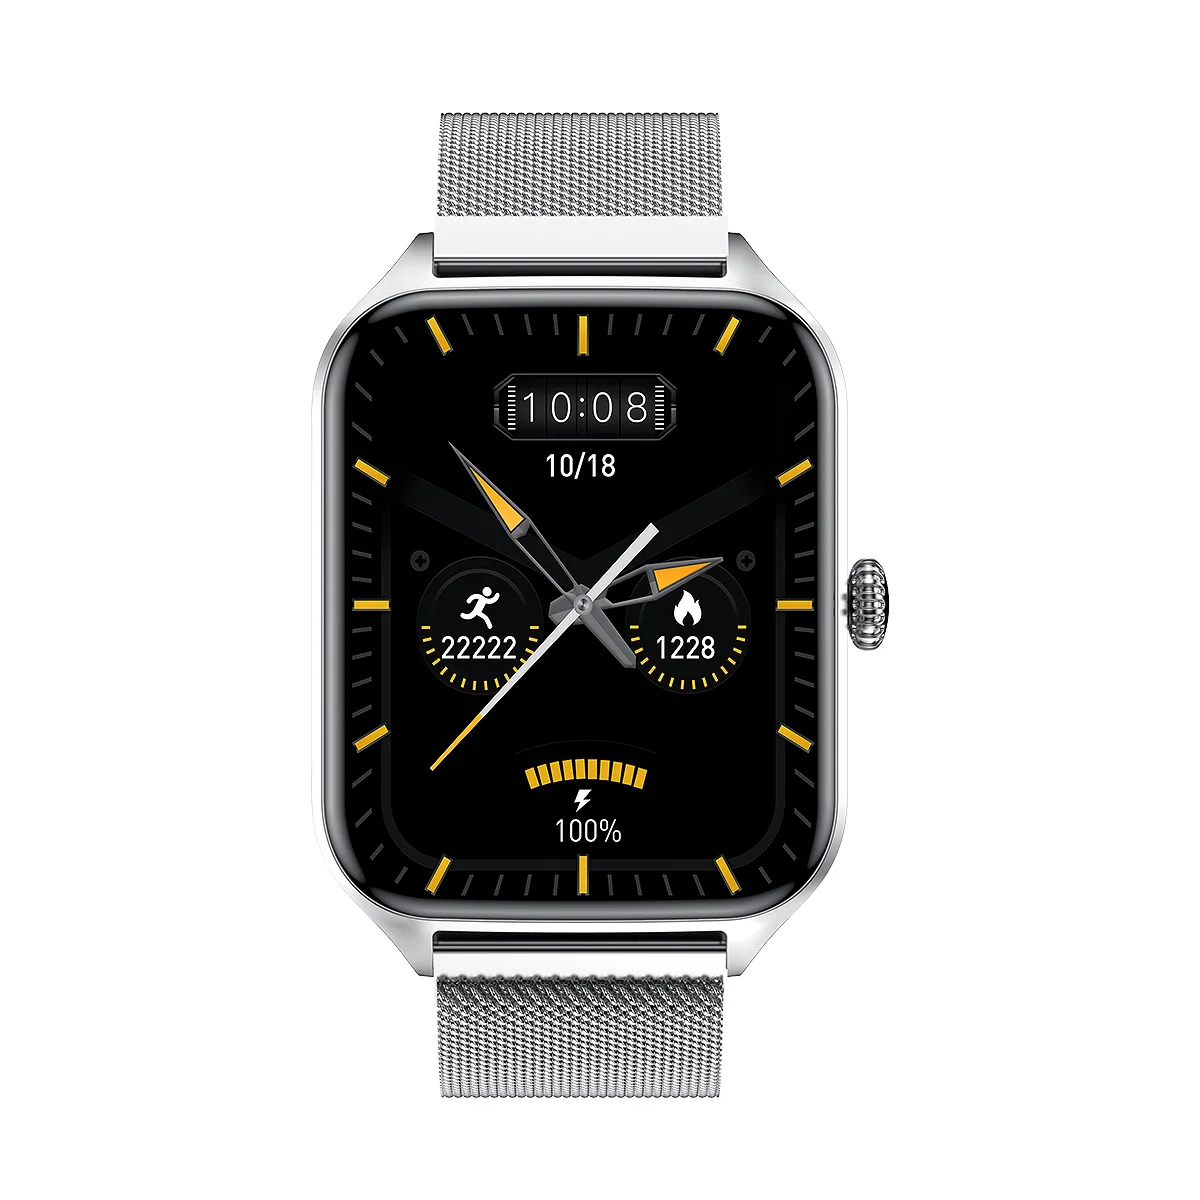 Reward Watch Offers Customizable Smartwatch Services to Help Users Achieve Their Health Goals